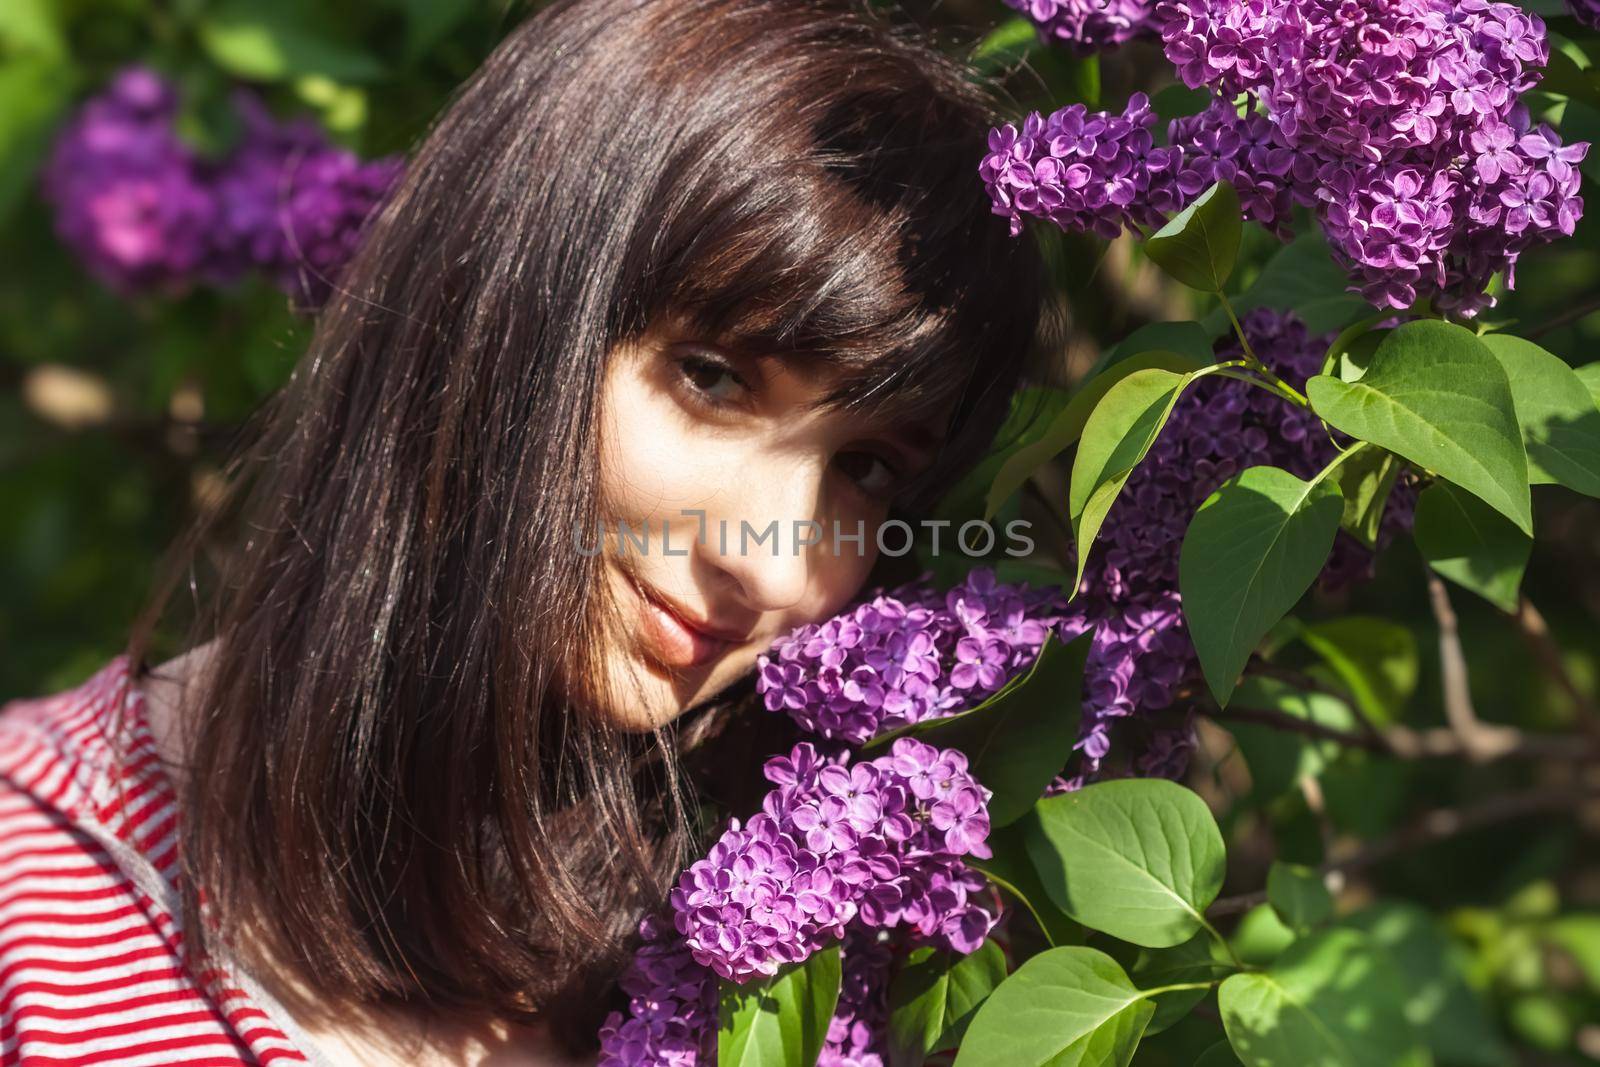 woman posing among blooming lilacs by palinchak